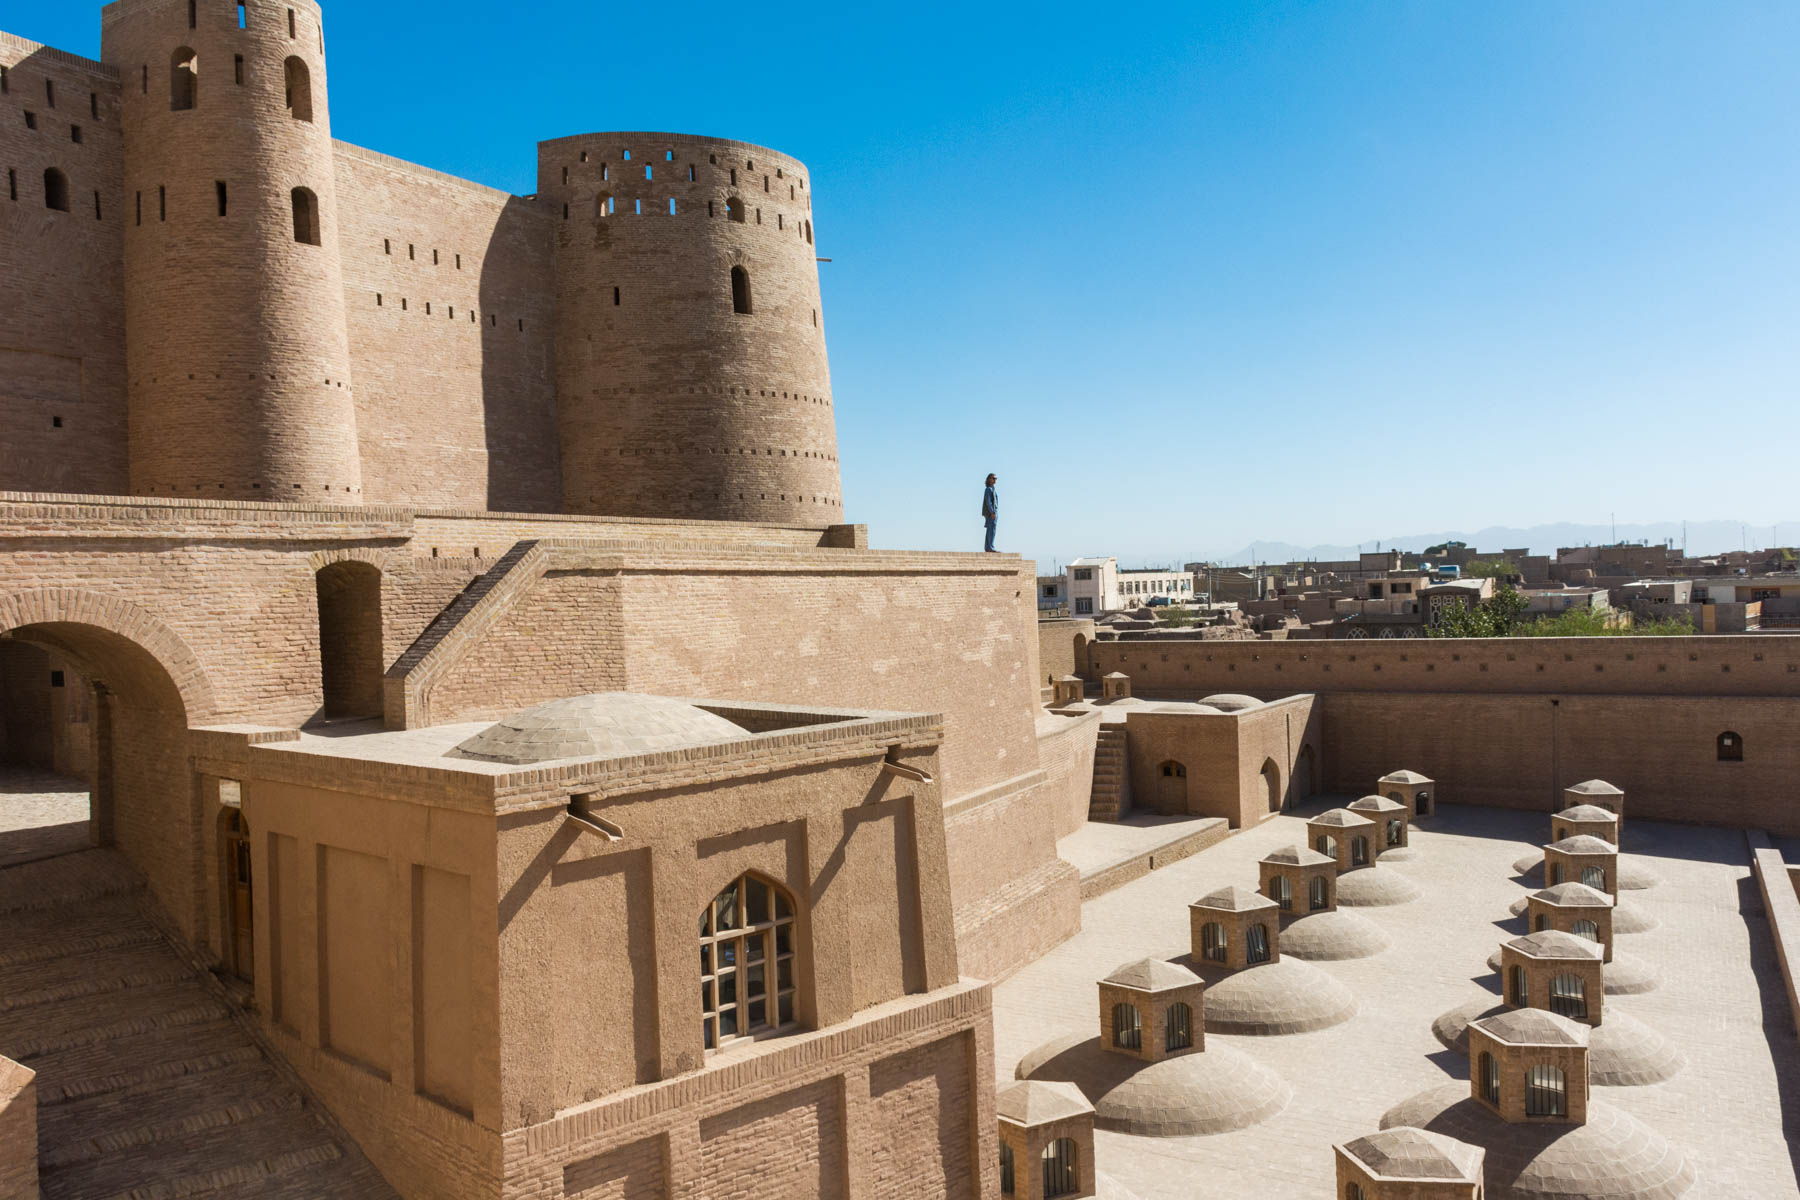 The recently restored Herat Citadel